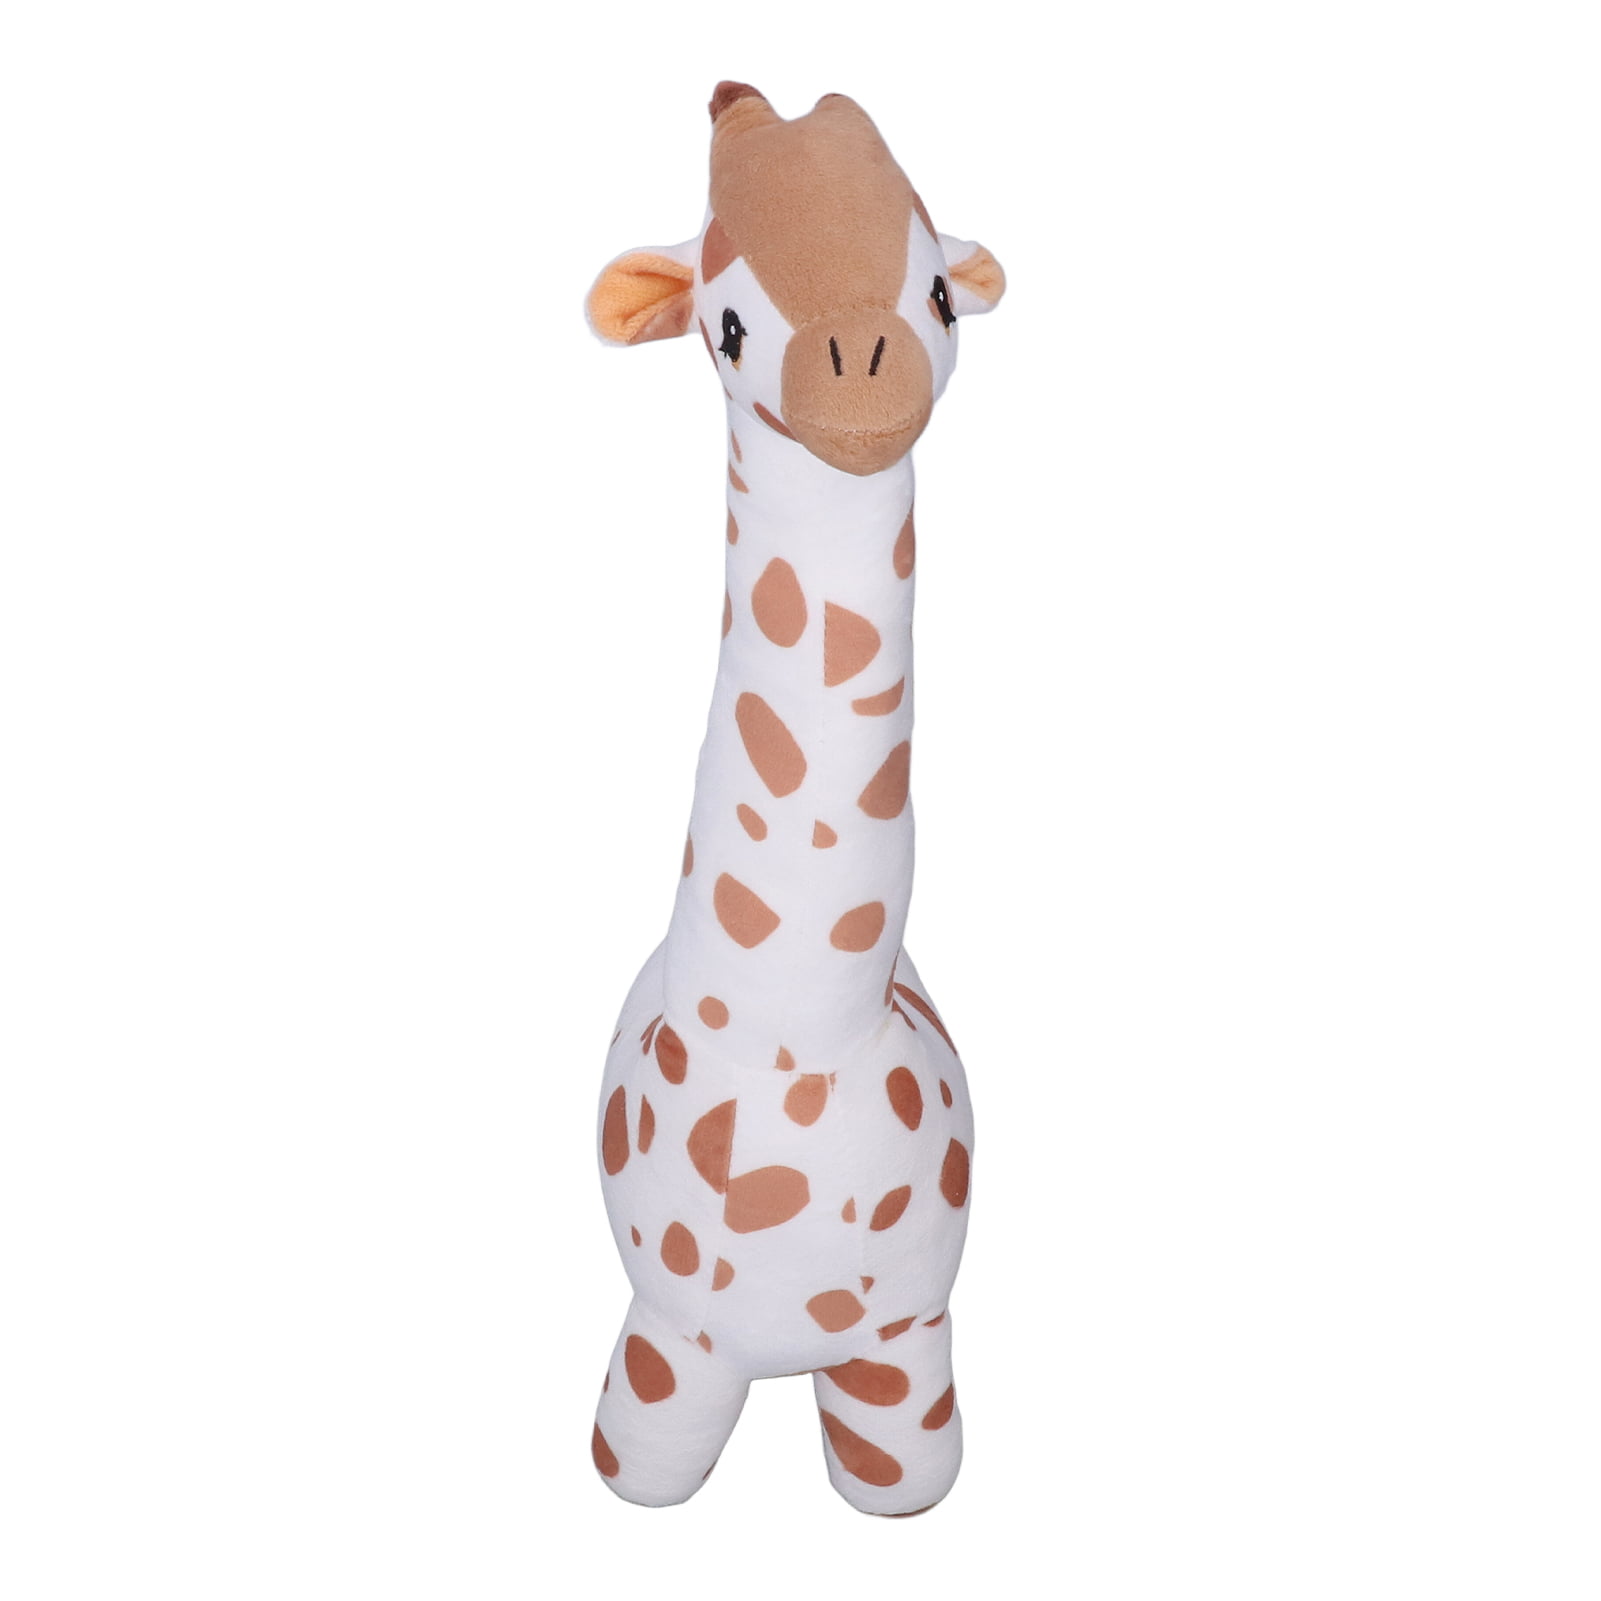 Giraffe?Plush?Doll, Soft Decoration 15 Inch Giraffe?Stuffed?Toy For Holiday  Party